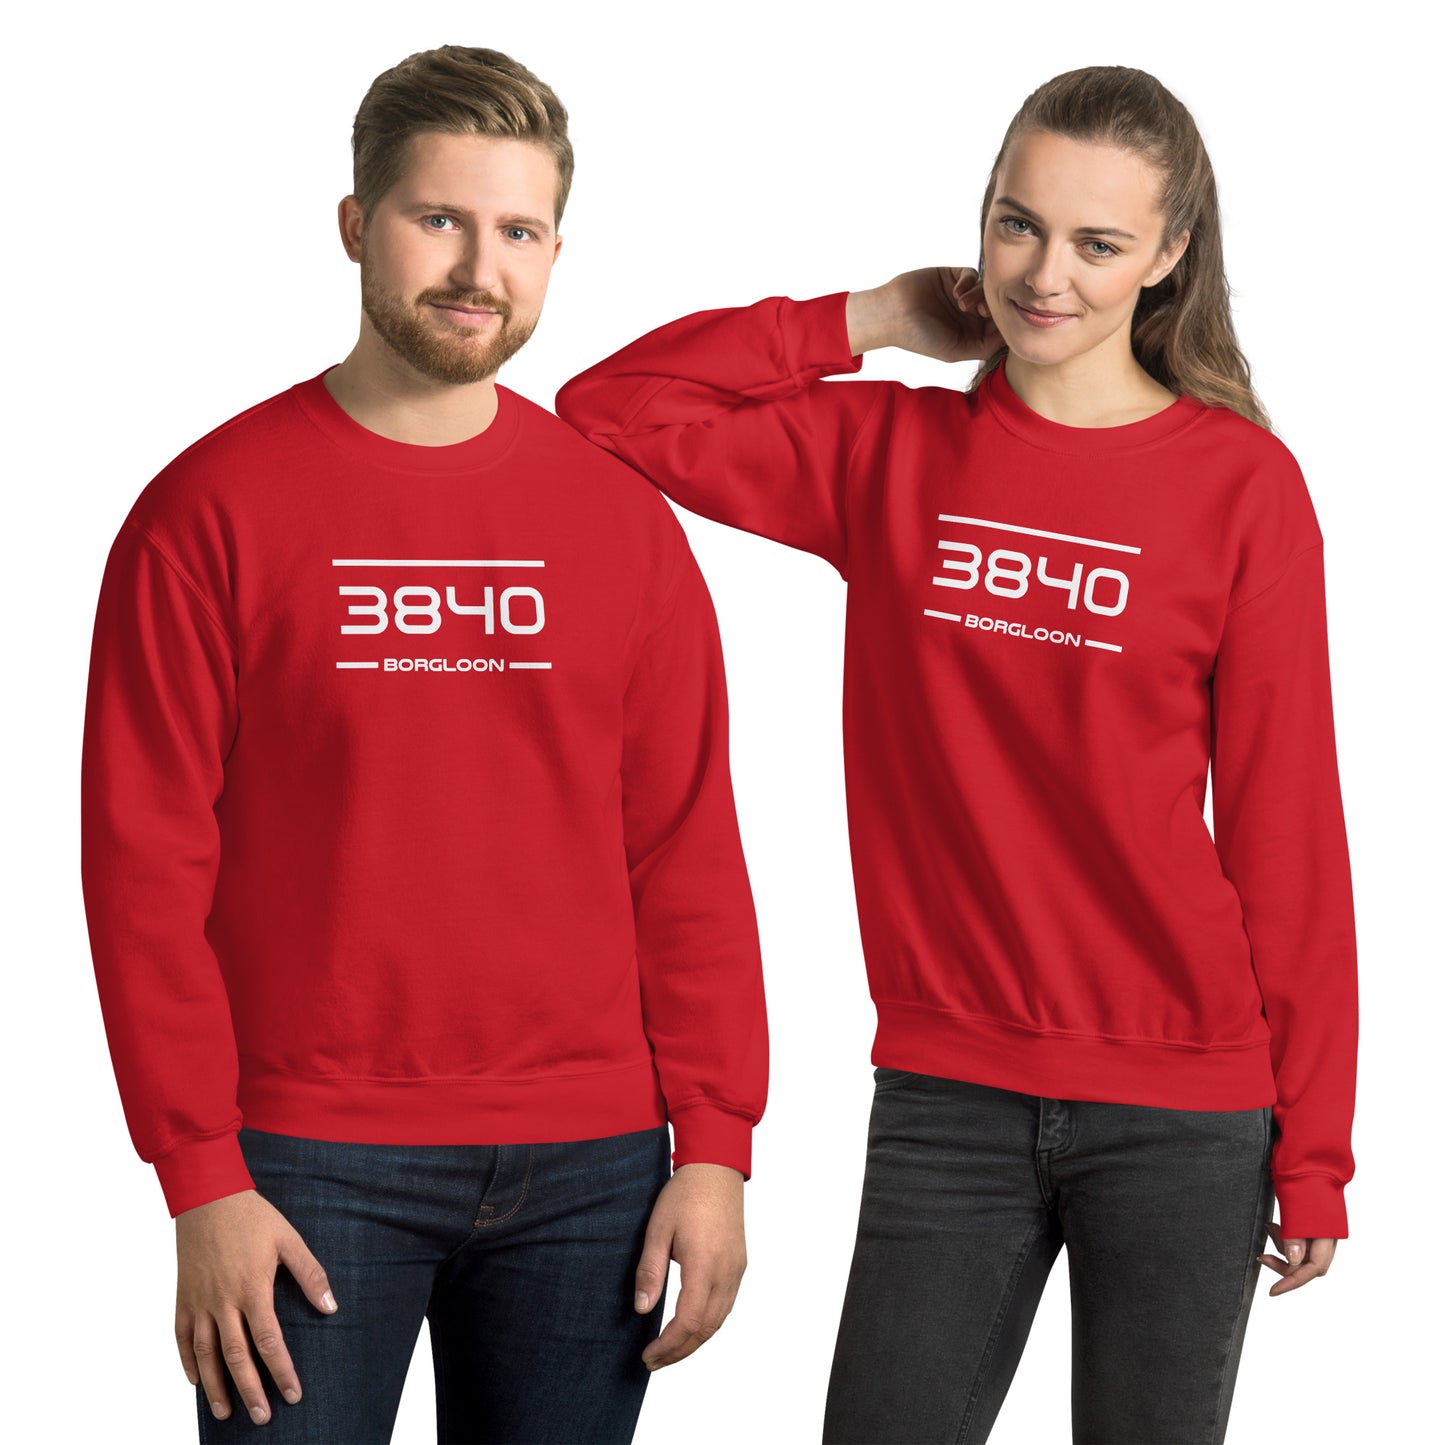 Sweater - 3840 - Borgloon (M/V)